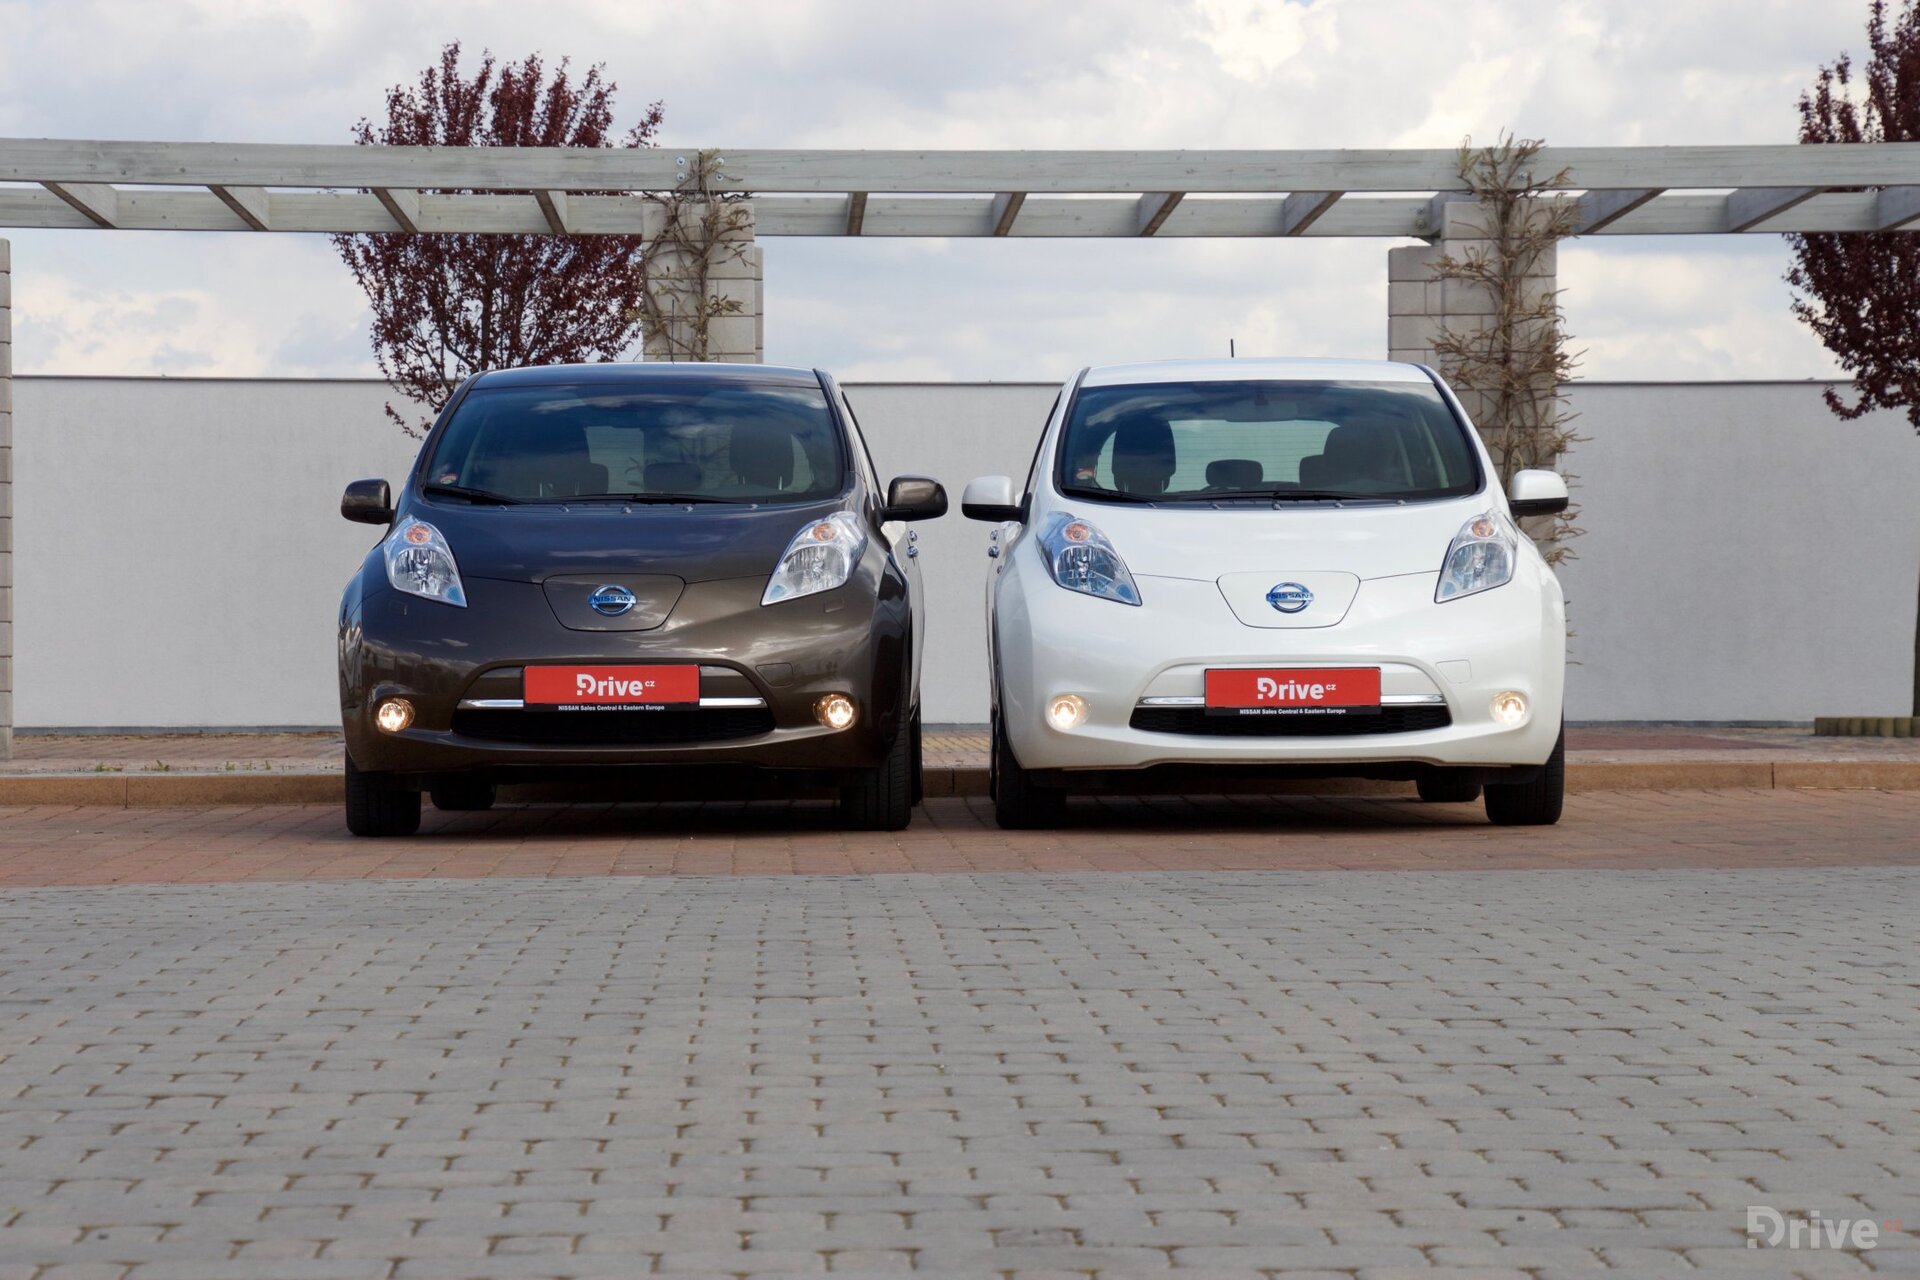 Nissan Leaf 30 kWh vs Leaf 24 kWh